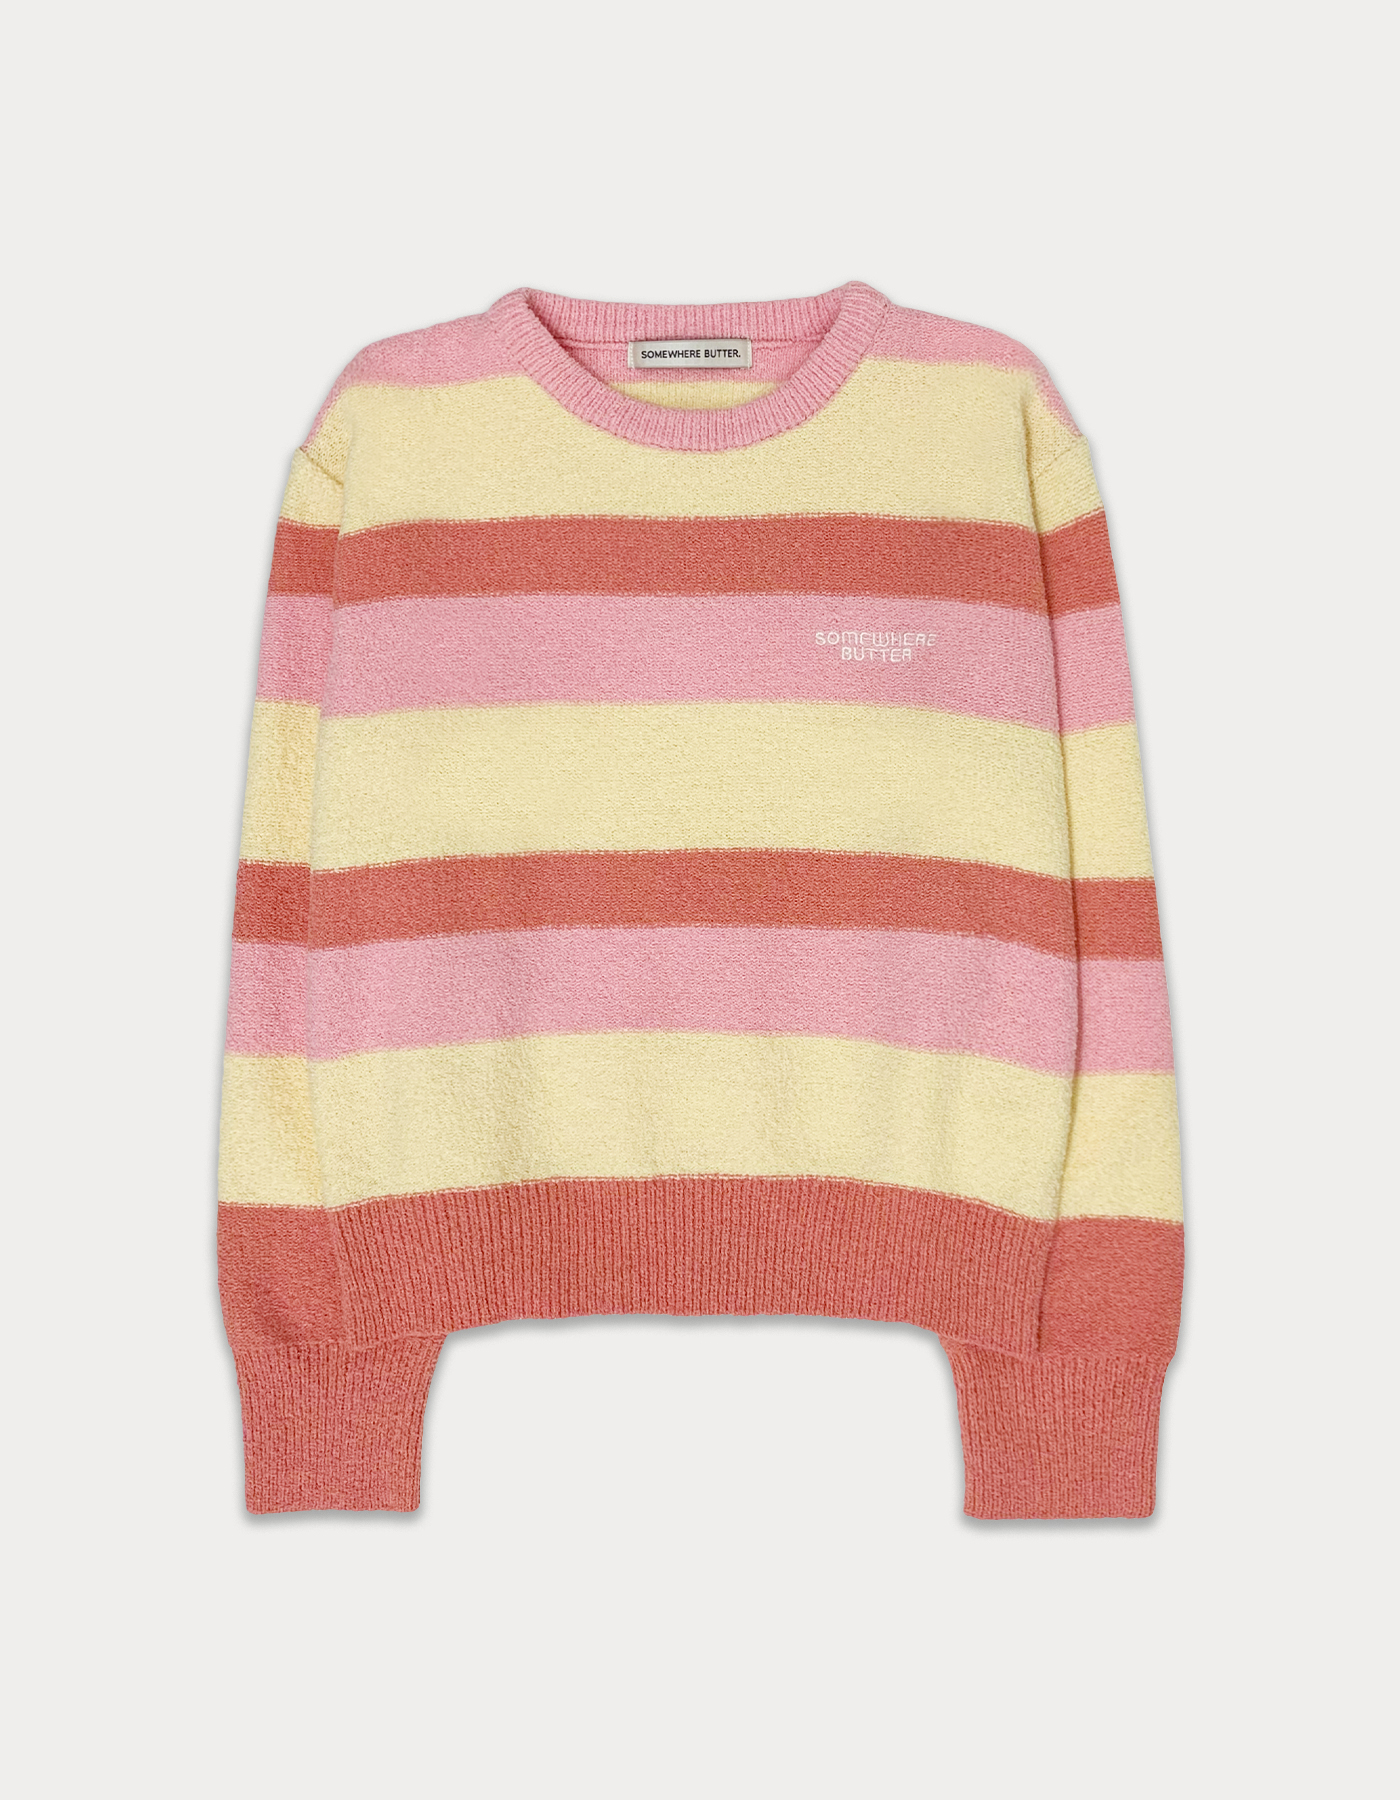 Molly stripe knit - pink